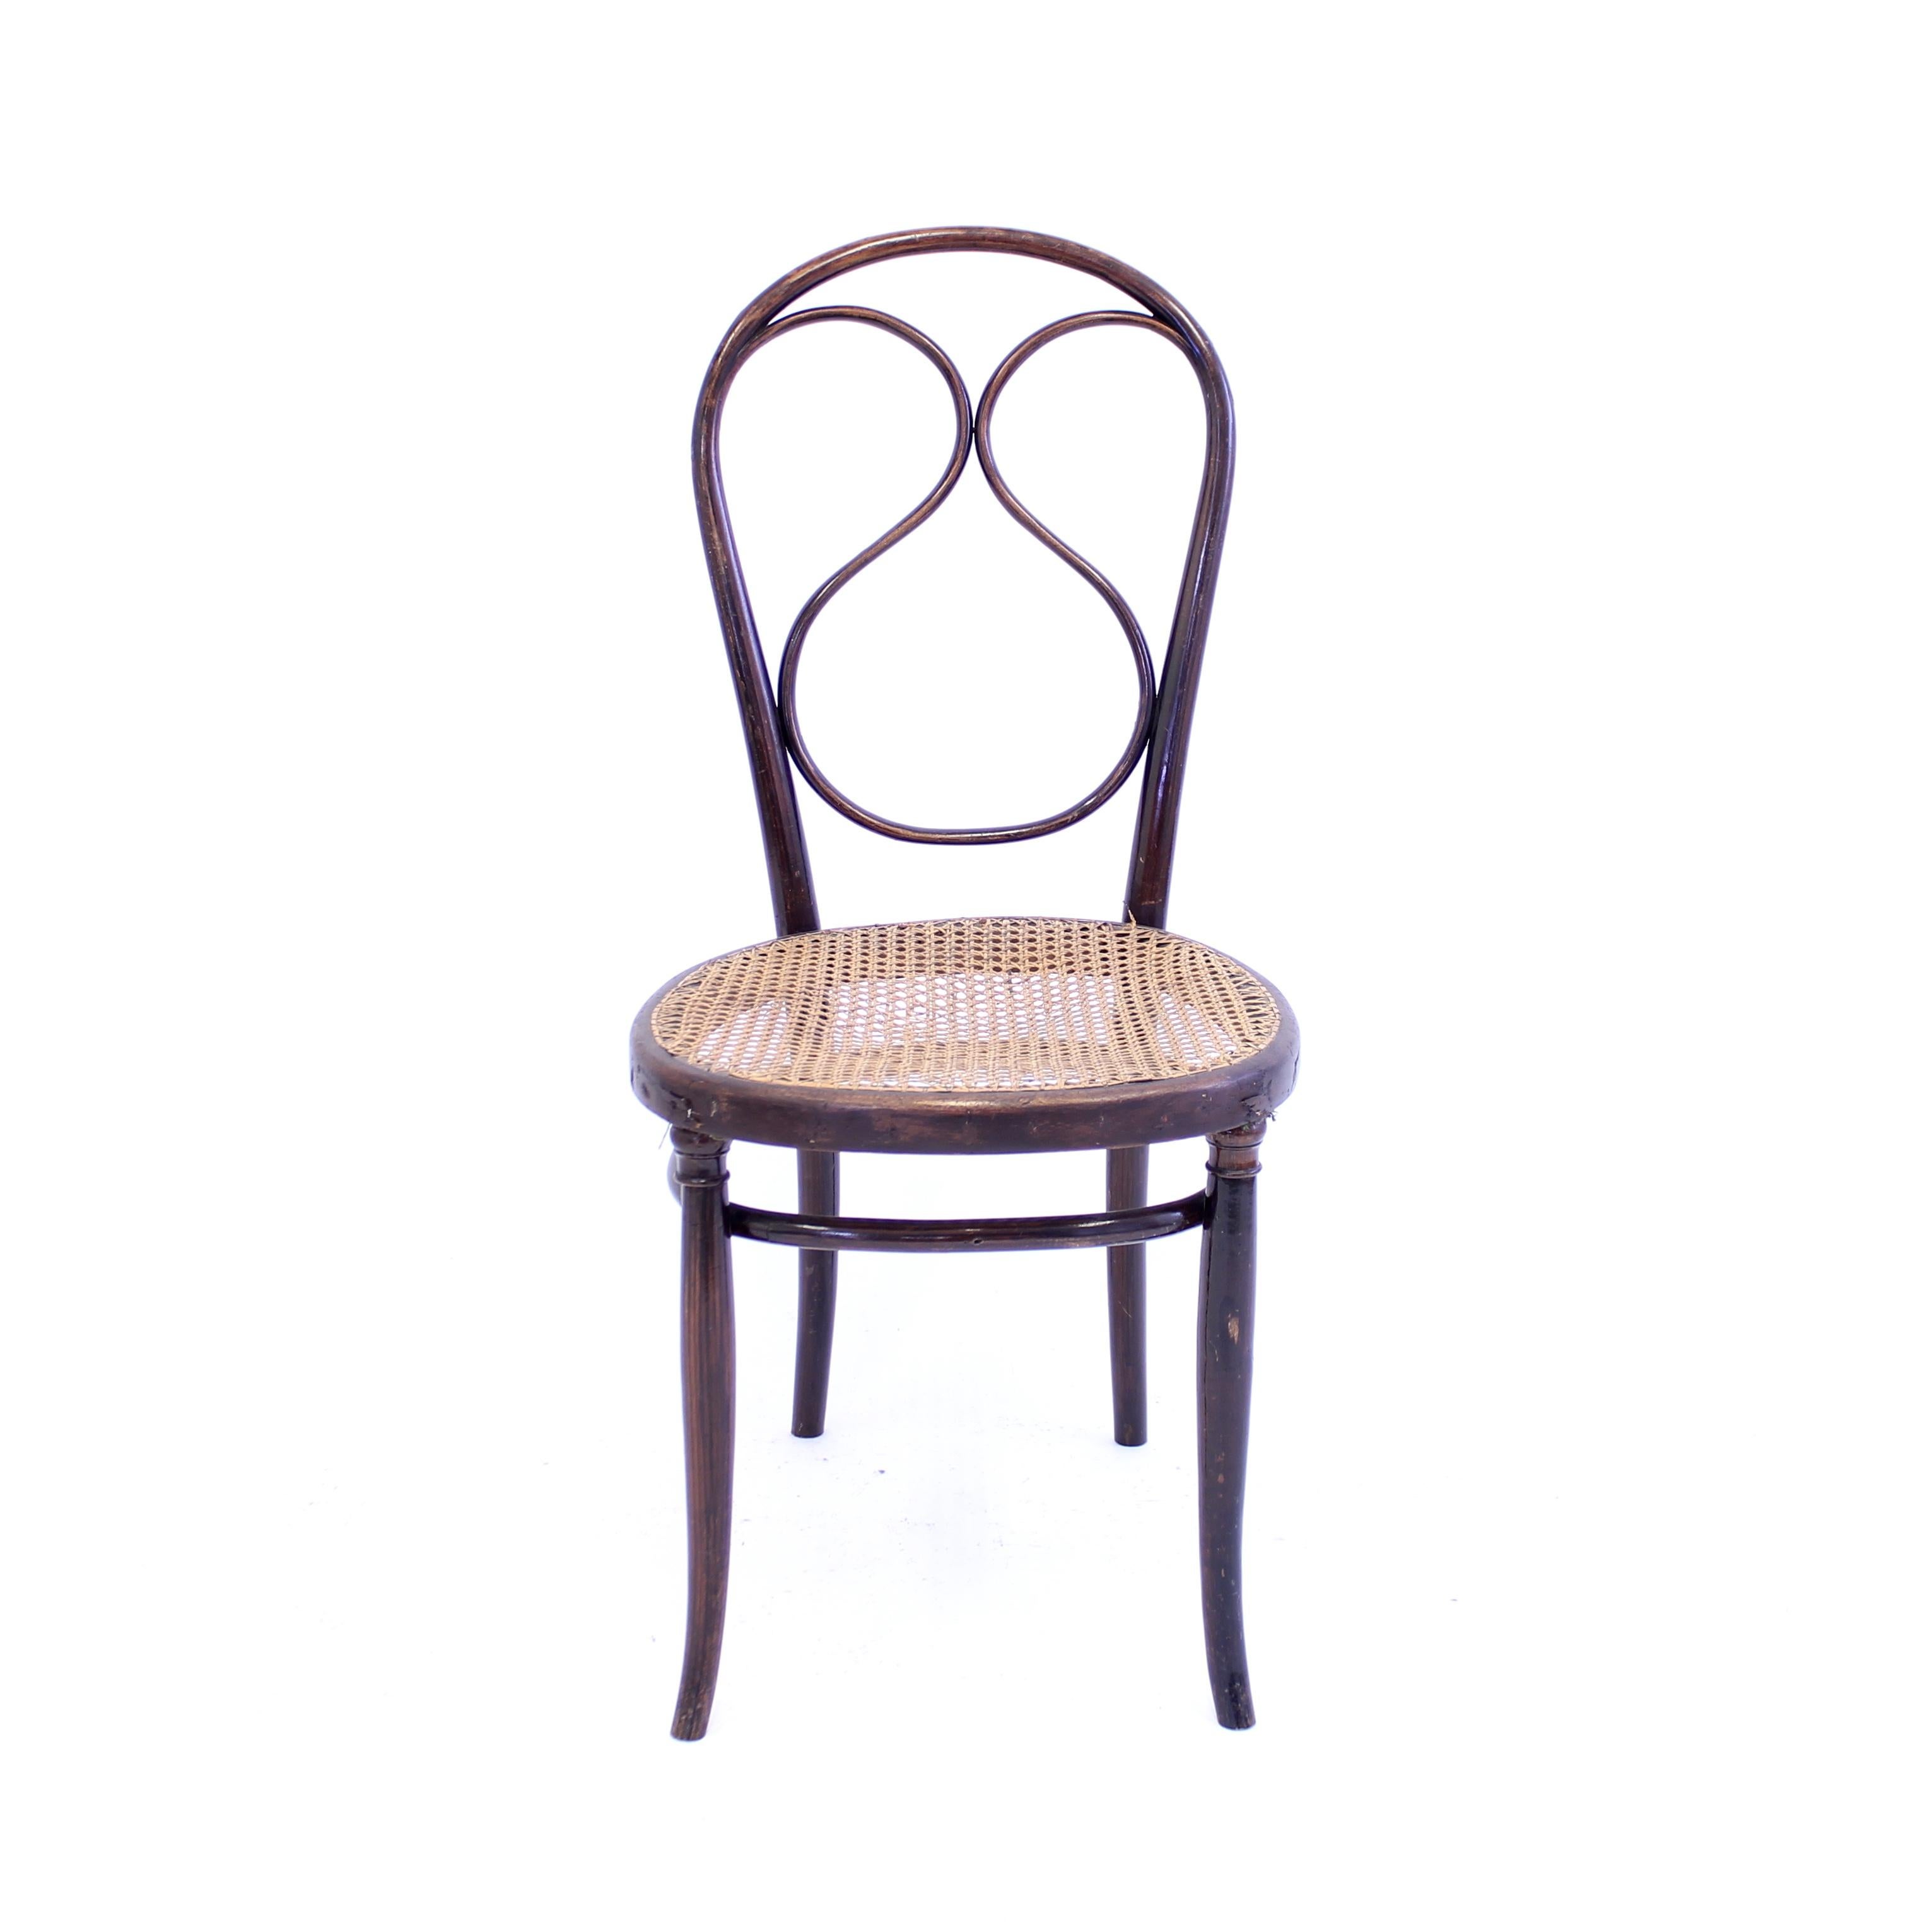 fischel bentwood chairs price